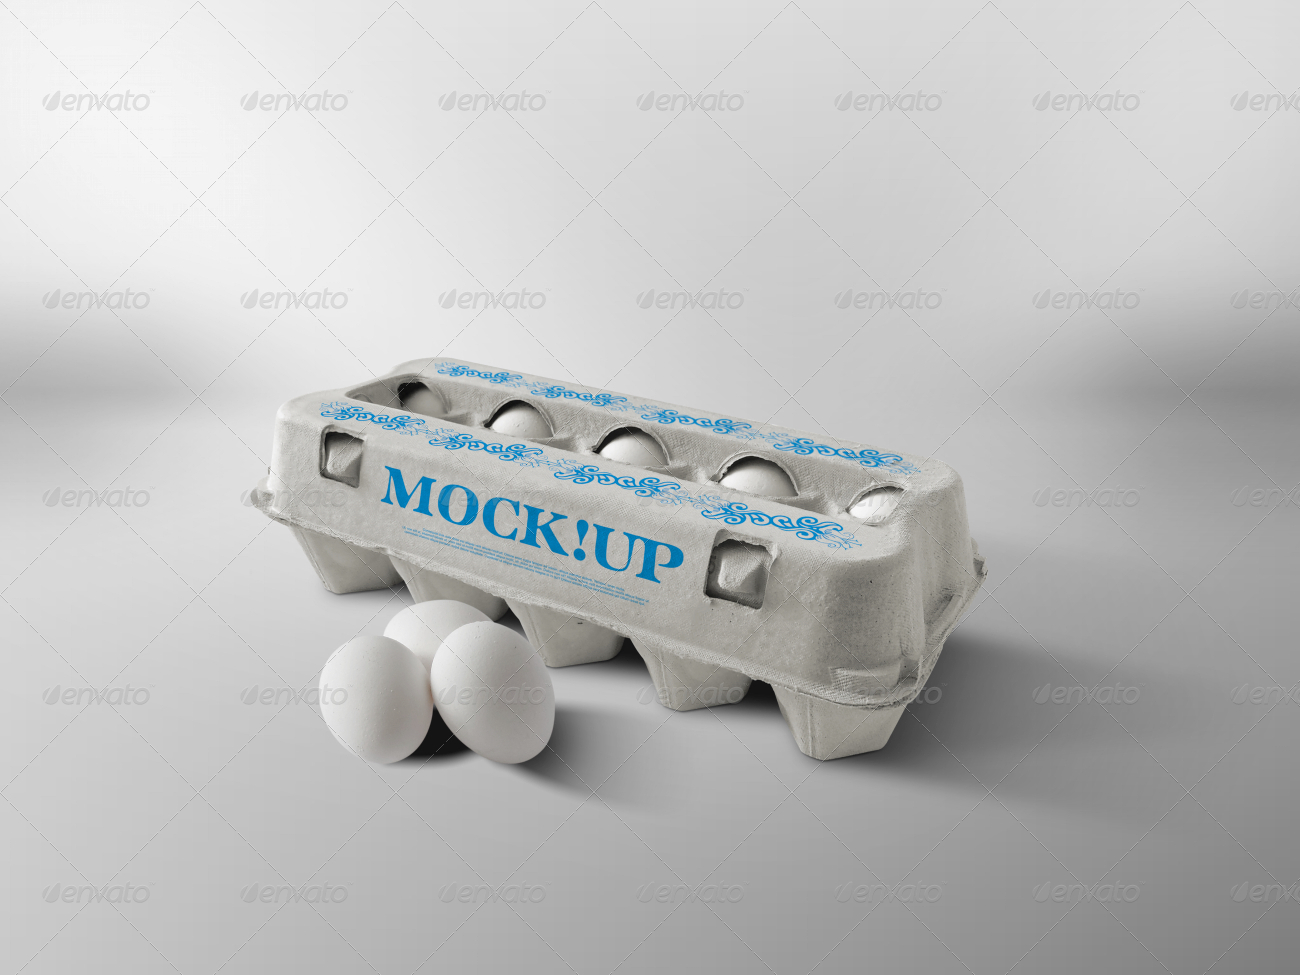 Egg Carton Mockup by Fusionhorn | GraphicRiver